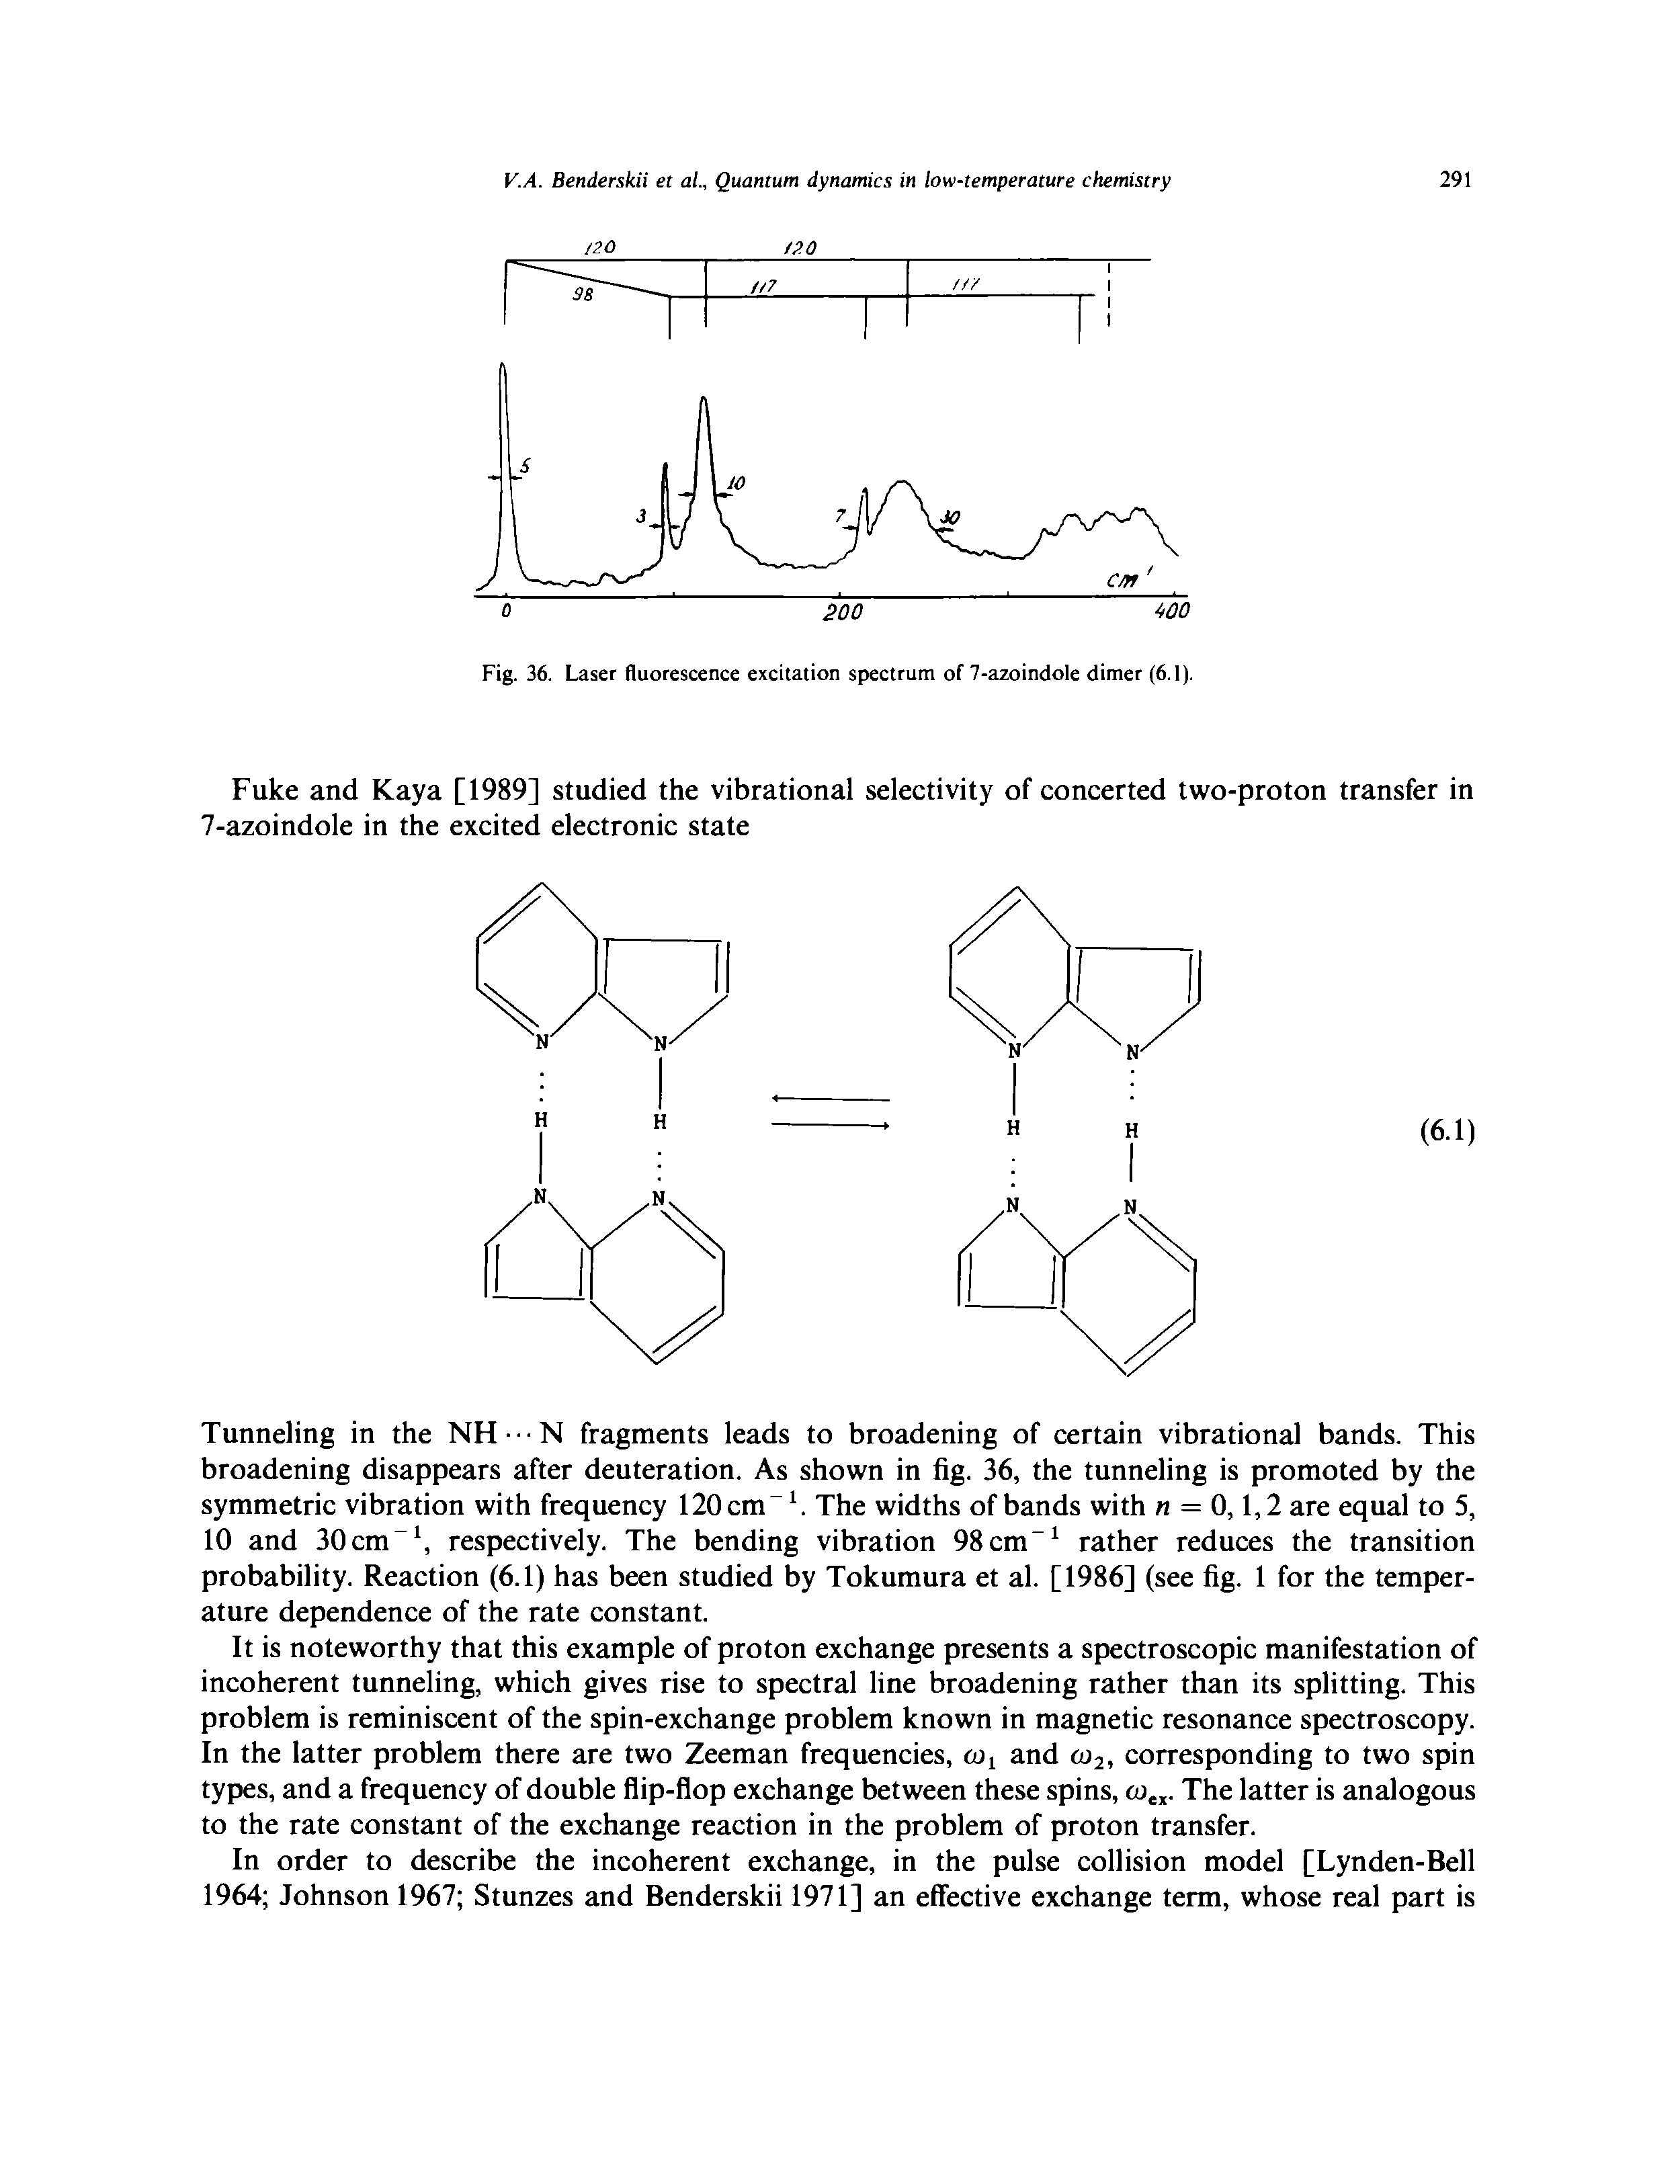 Fig. 36. Laser fluorescence excitation spectrum of 7-azoindole dimer (6.1).